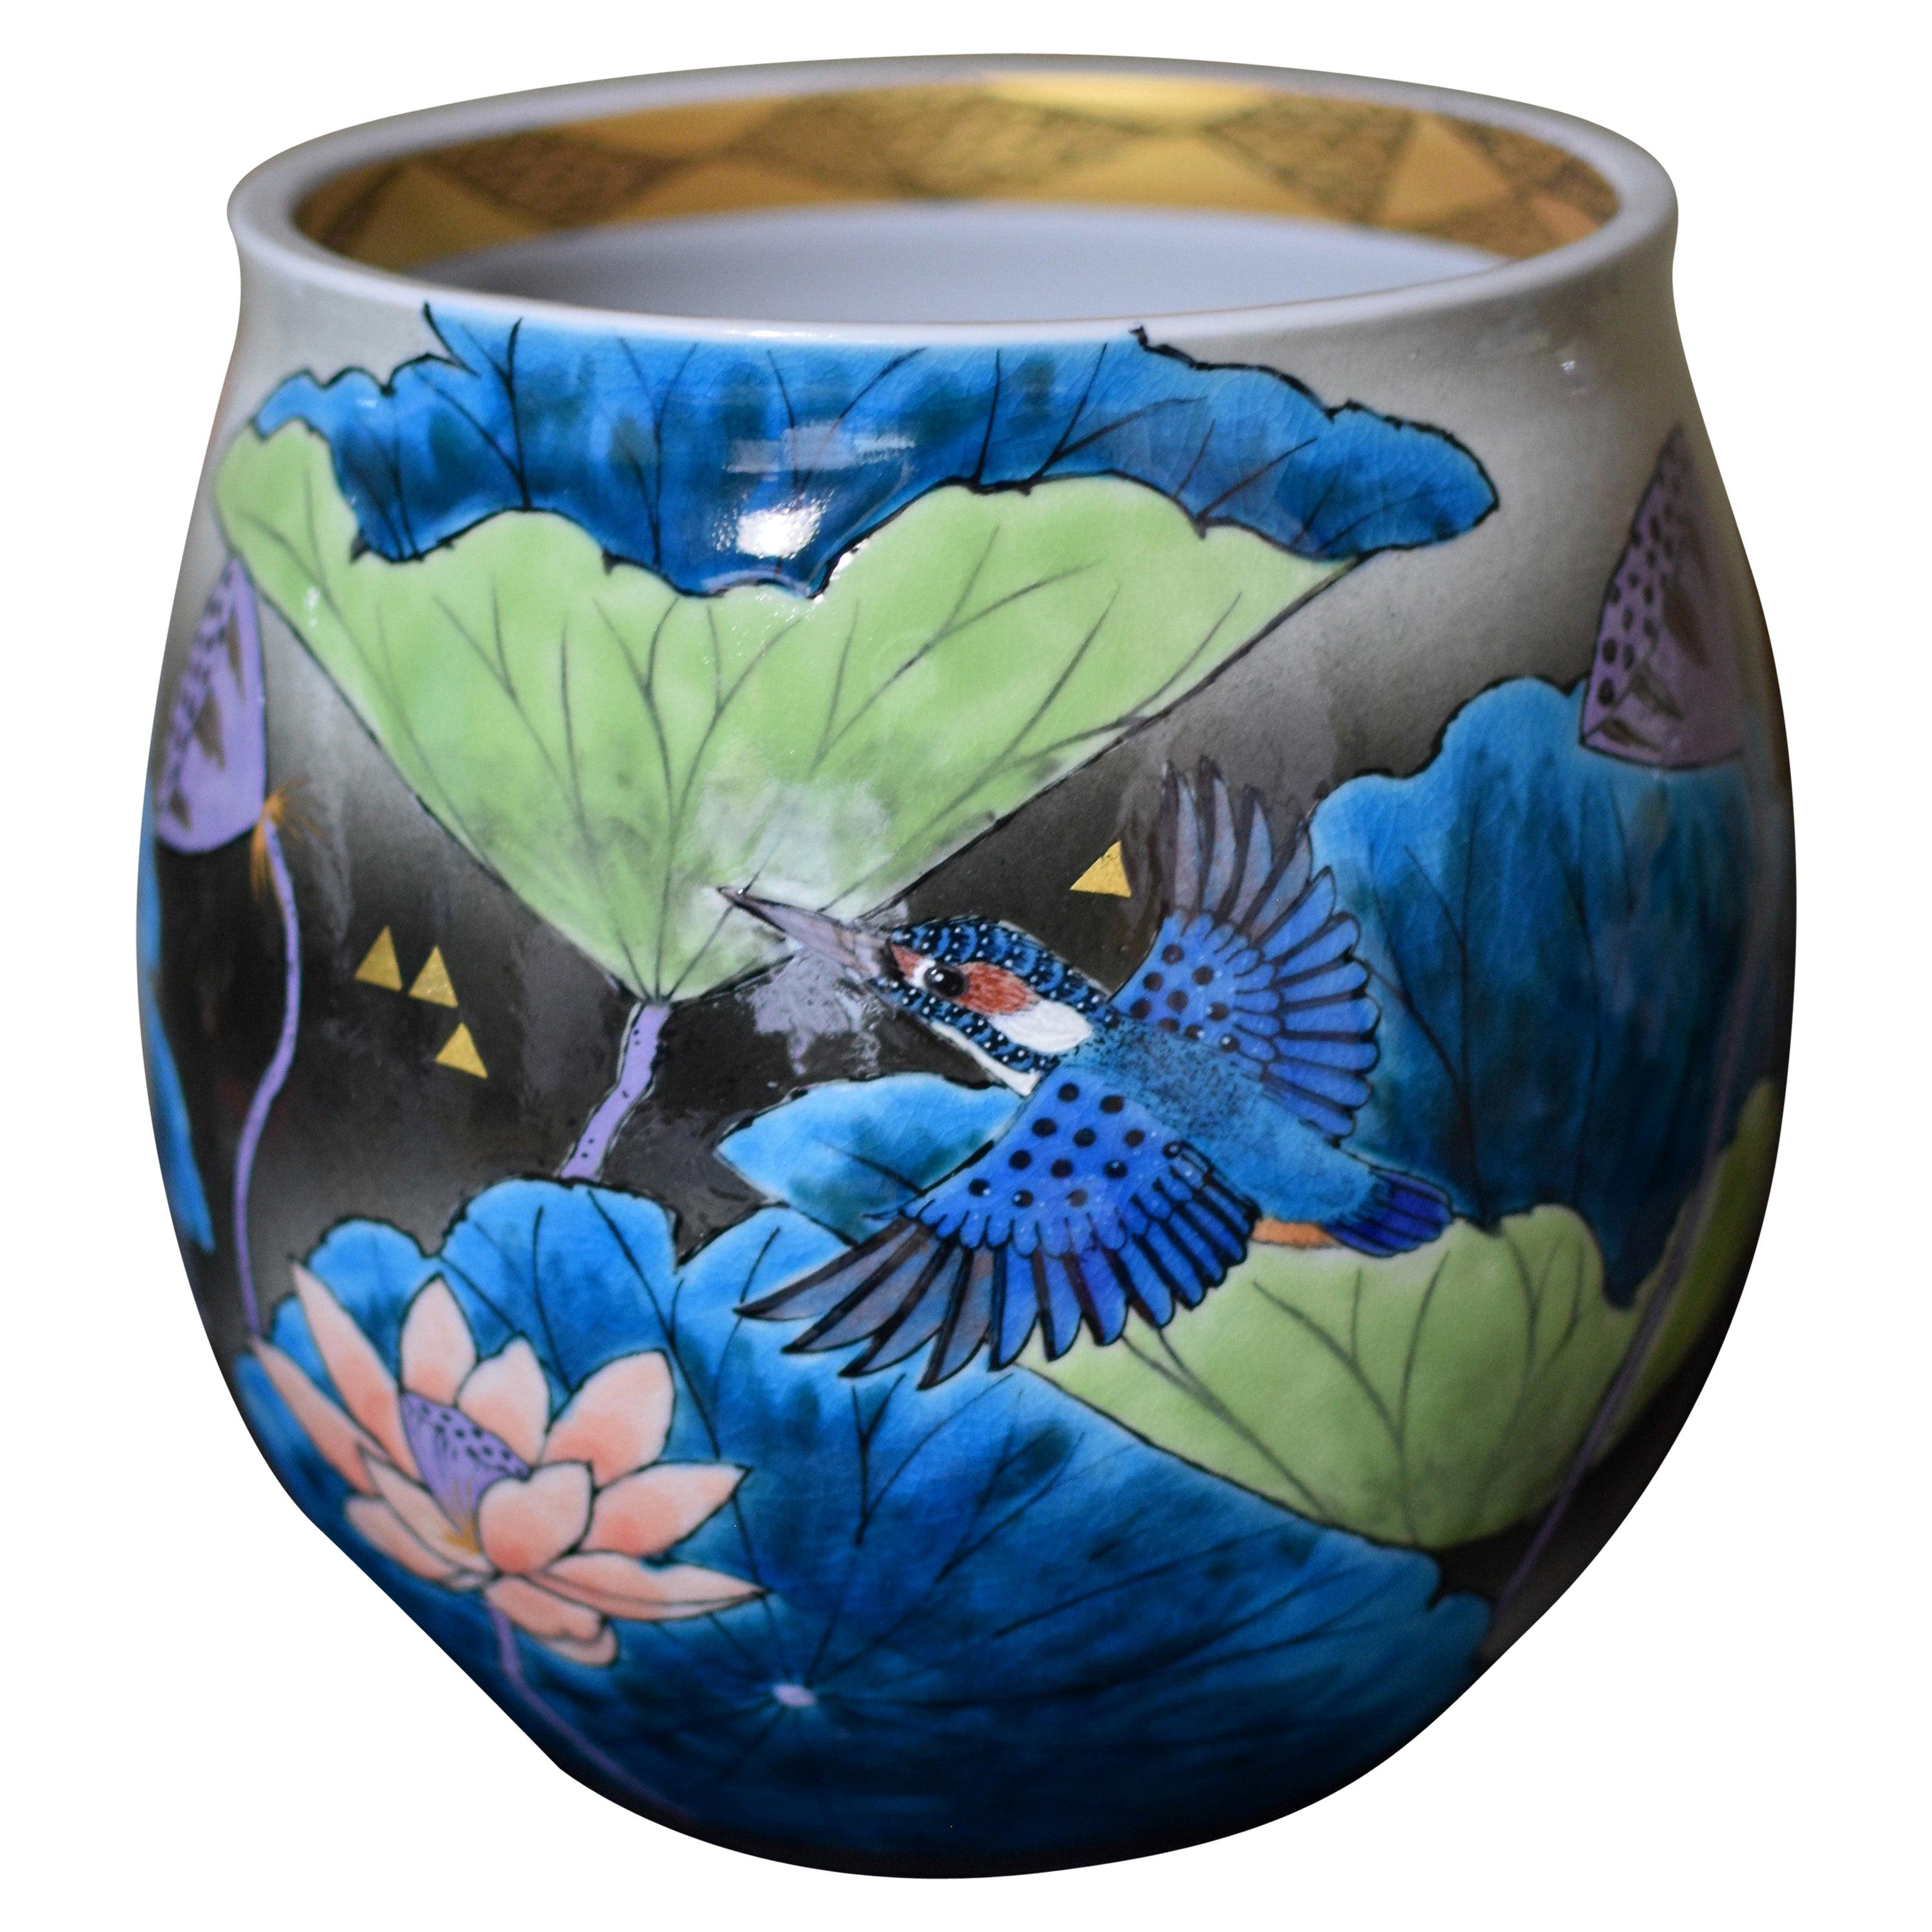 Contemporary Japanese Blue Green Black Porcelain Vase by Master Artist